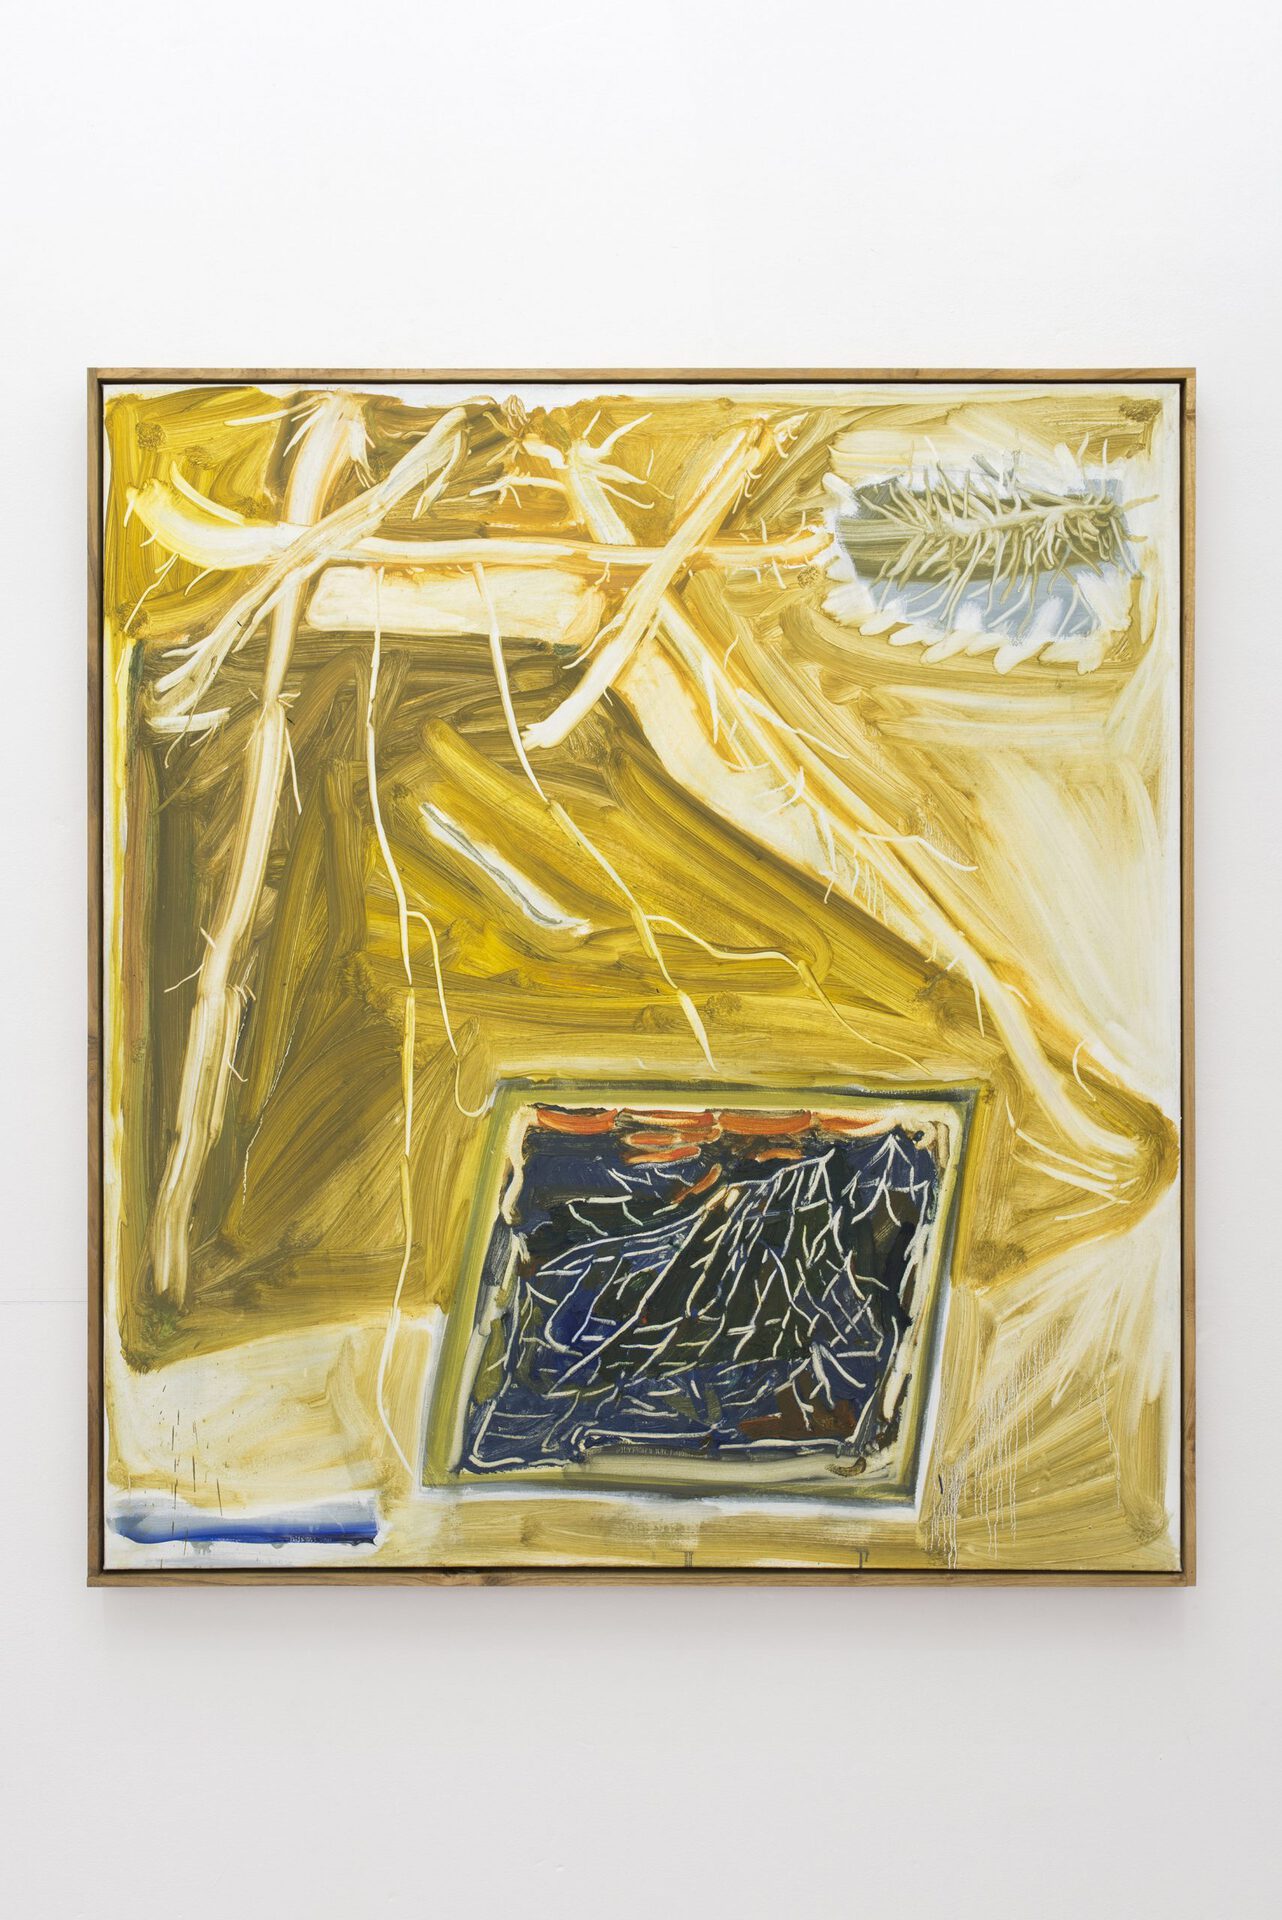 Jonas Dehnen, ’Swing II’ oil and beeswax on canvas, black locust artist’s frame, 120 x 130 cm, 2020 (2)